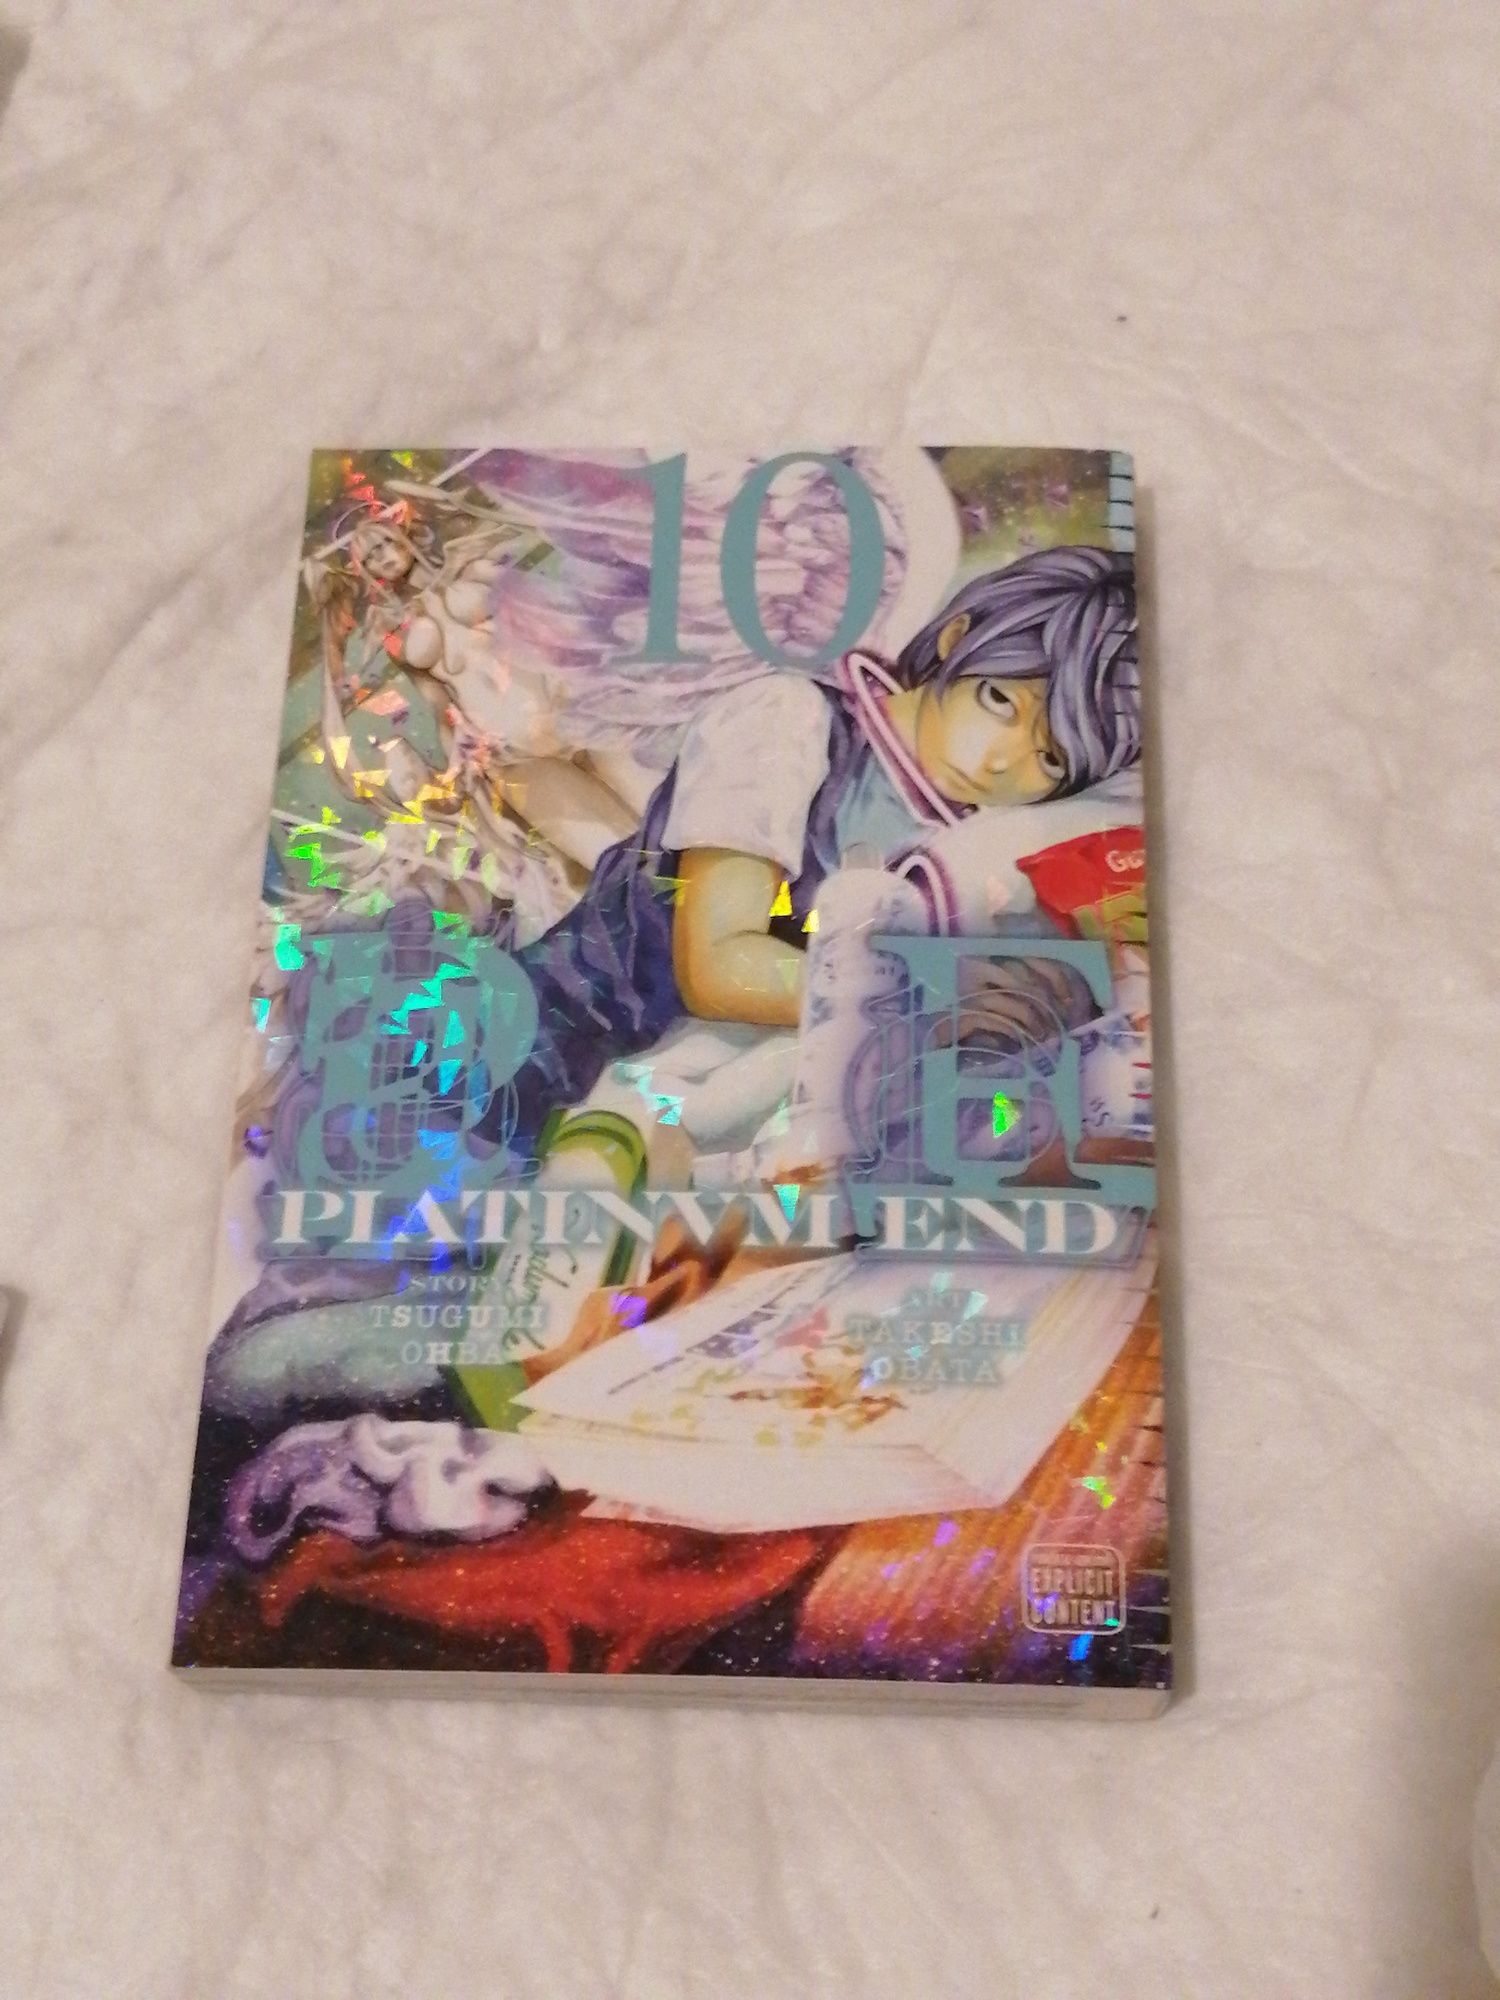 Platinum end volume 10 em inglês